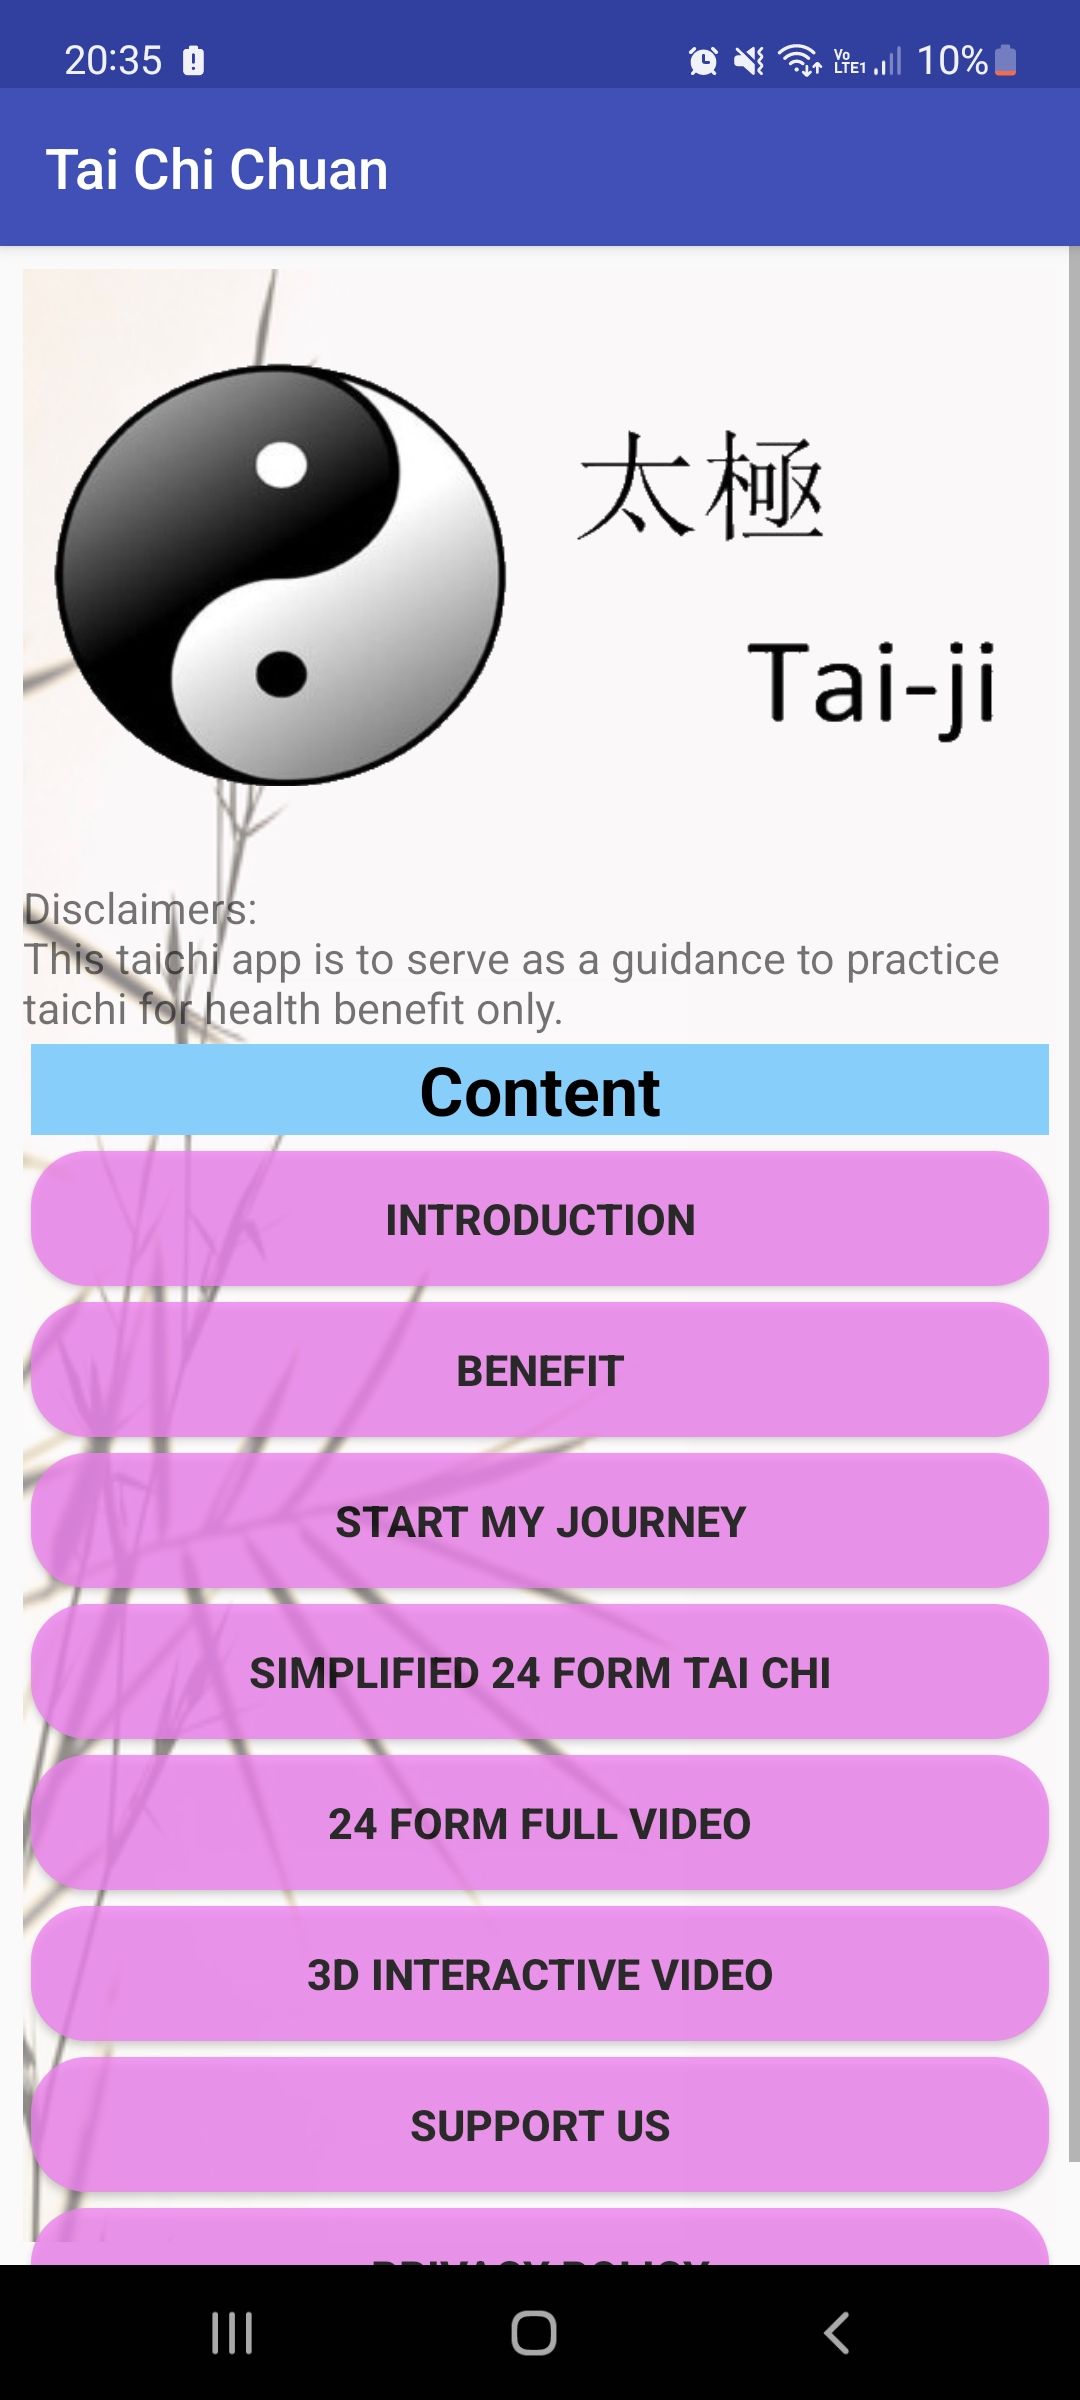 Tai Chi Chuan mobile app content